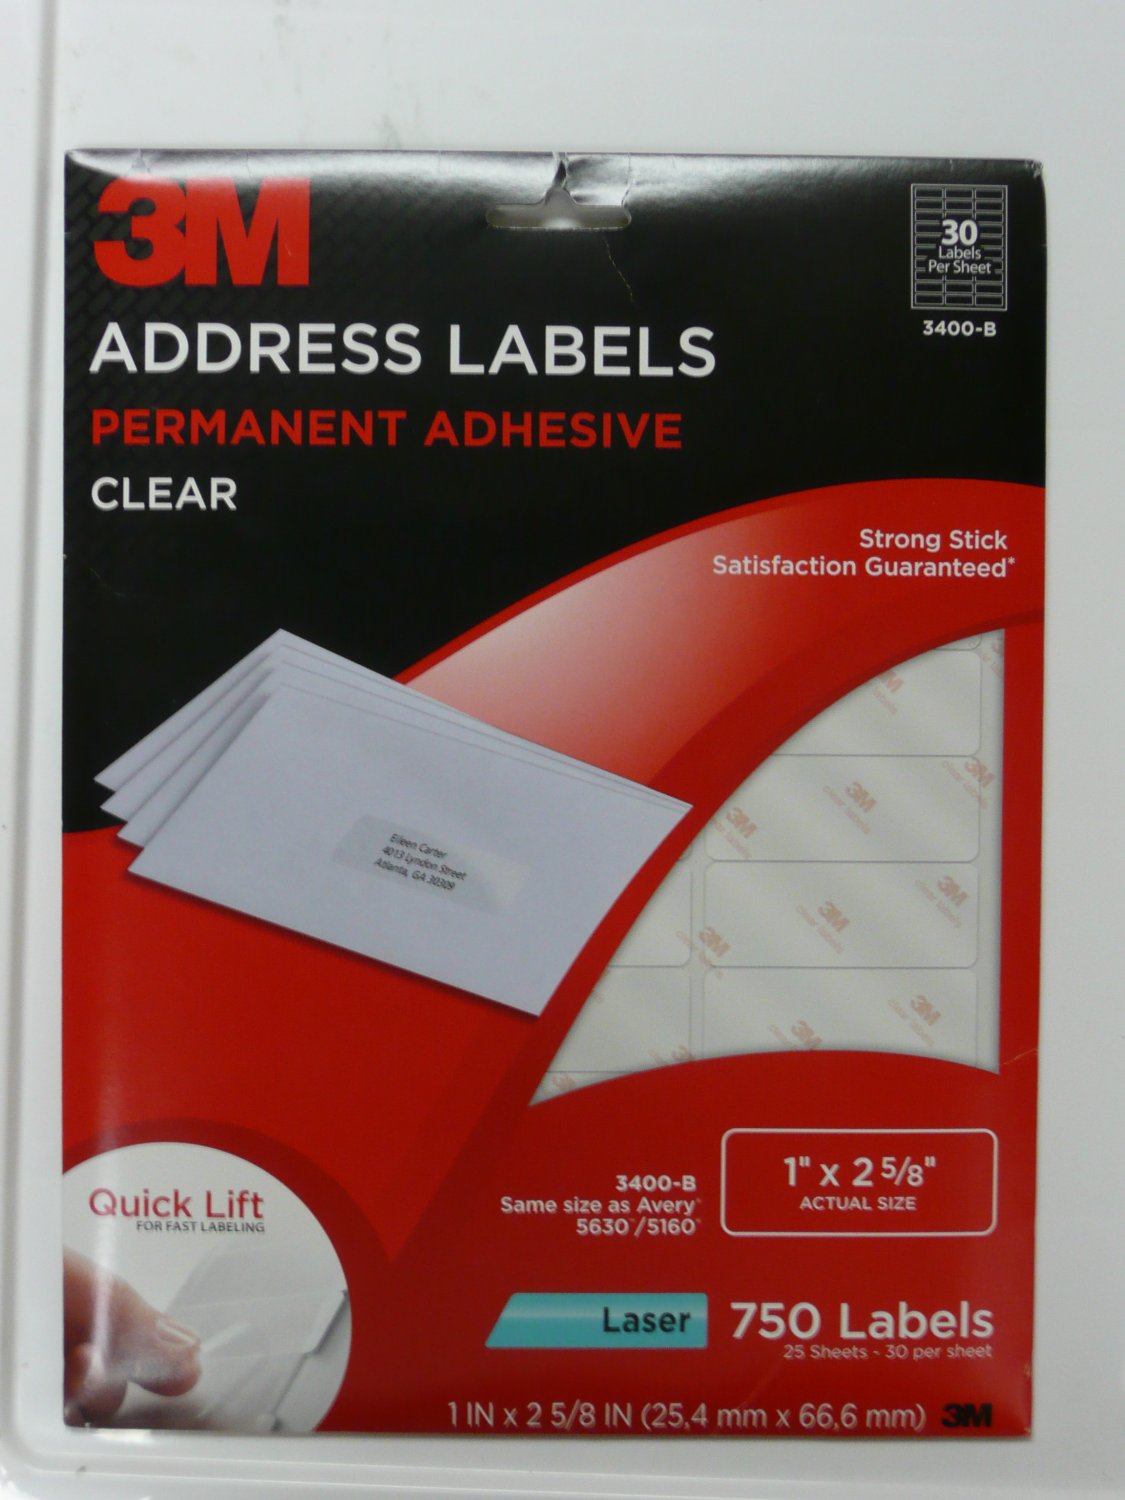 3M Address Labels Clear Laser 750/pk 1 x 2 5/8 3400 B similar to